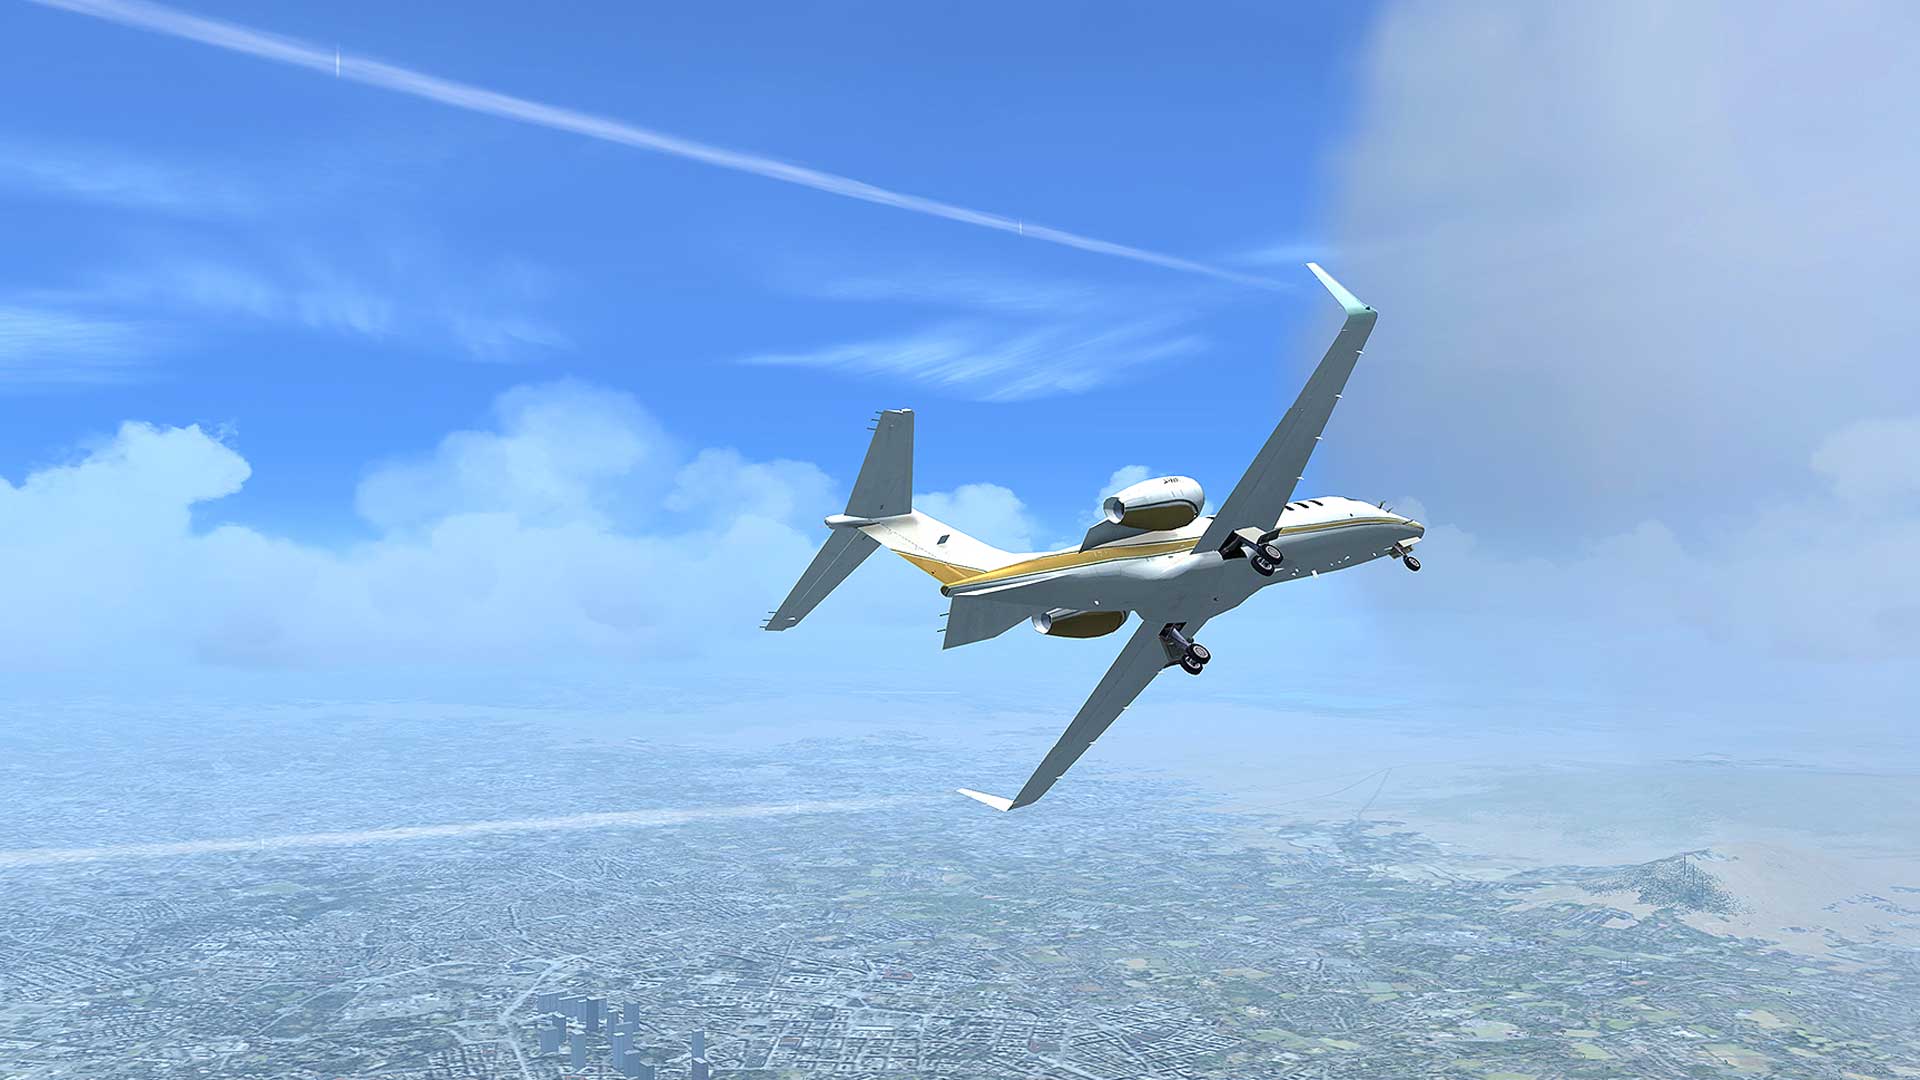 Microsoft Flight Simulator 40th Anniversary Edition on Steam